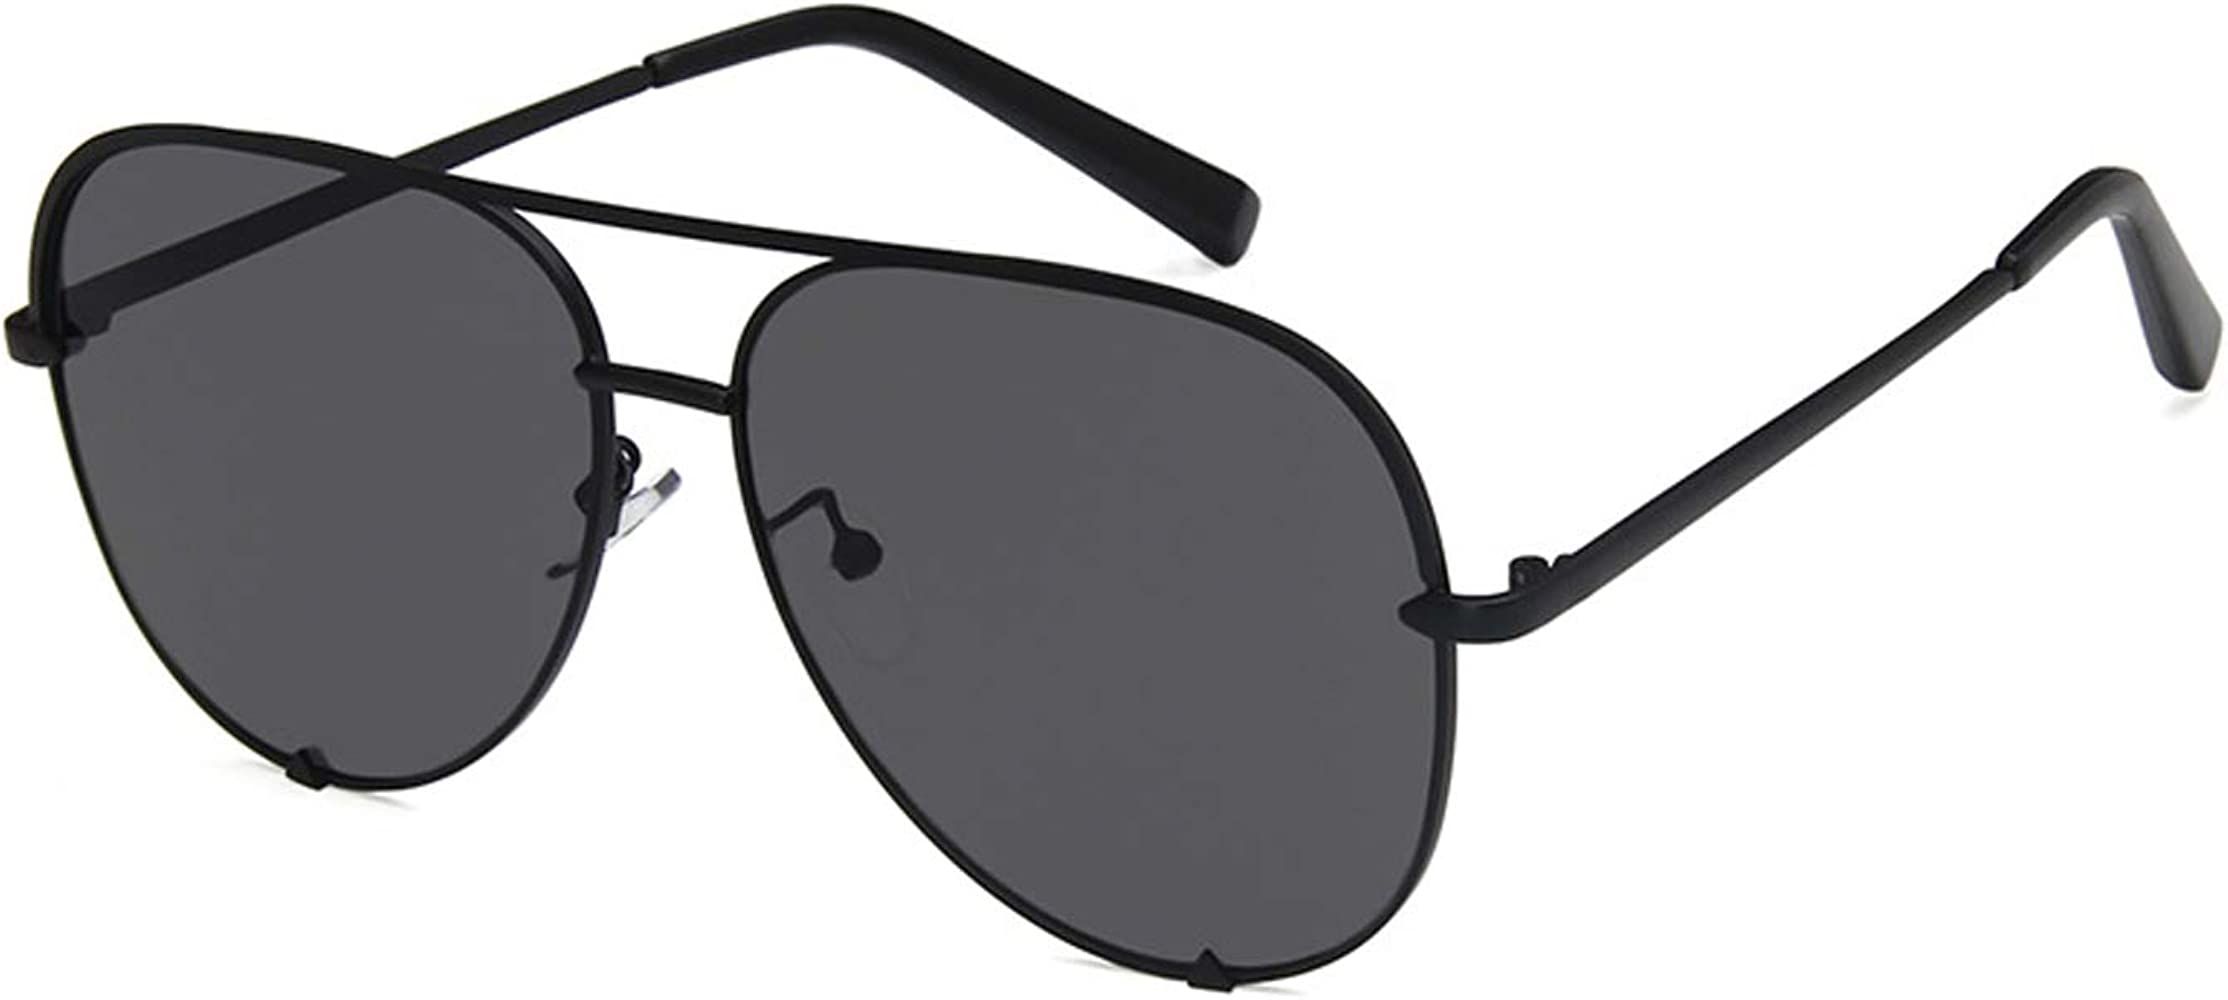 SORVINO Black Aviator Sunglasses for Women Classic Oversized Sun Glasses UV400 Protection | Amazon (US)